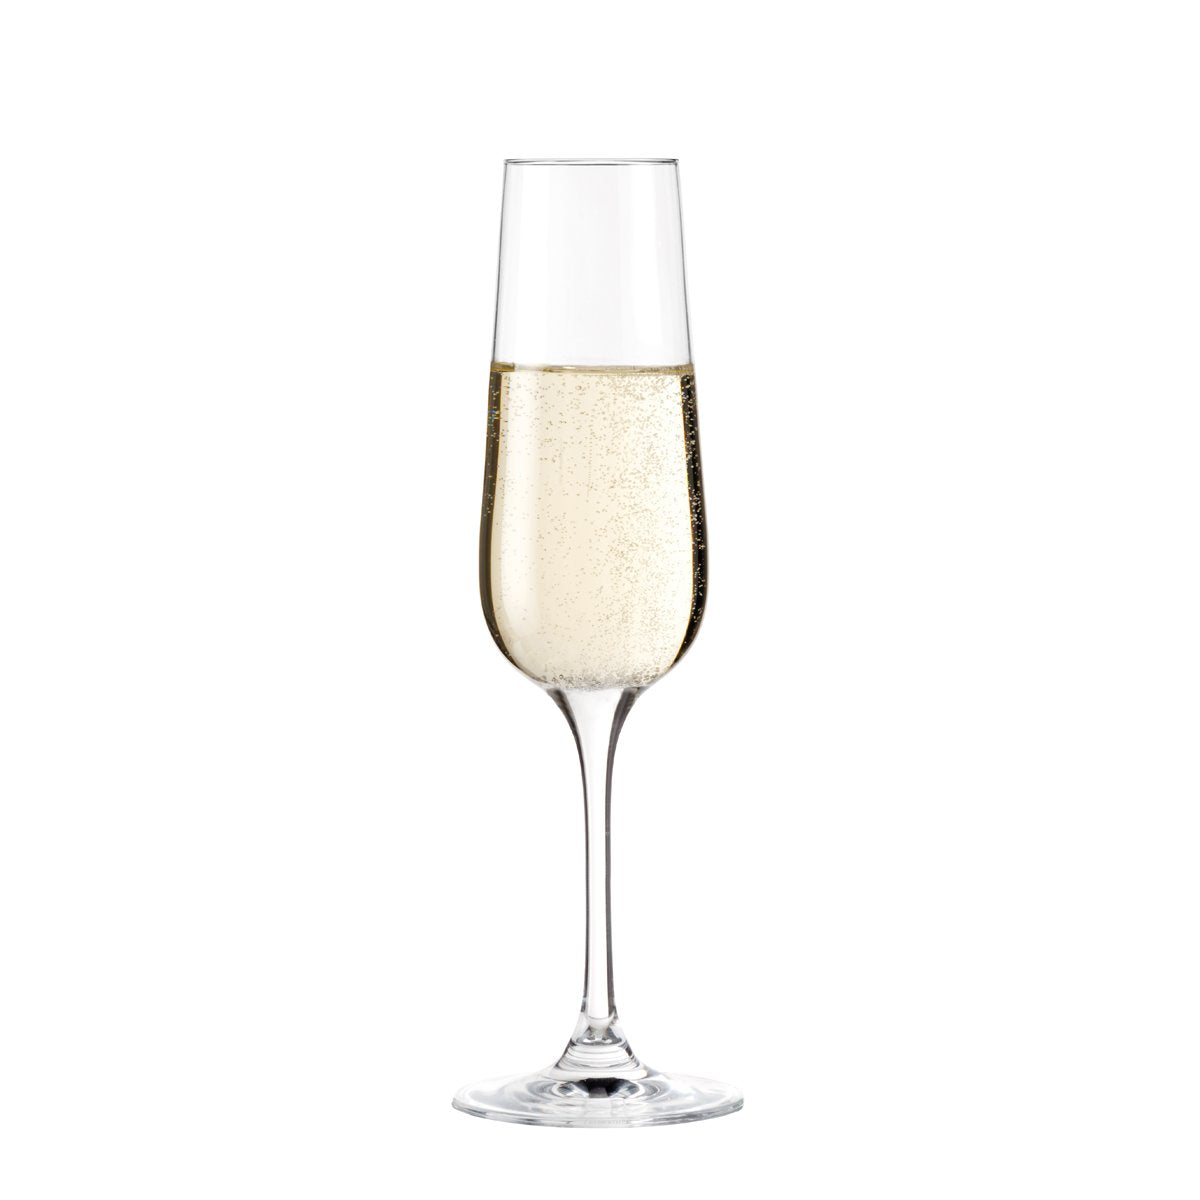 Leonardo Champagne Glasses - Set of 6 in TIVOLI Design